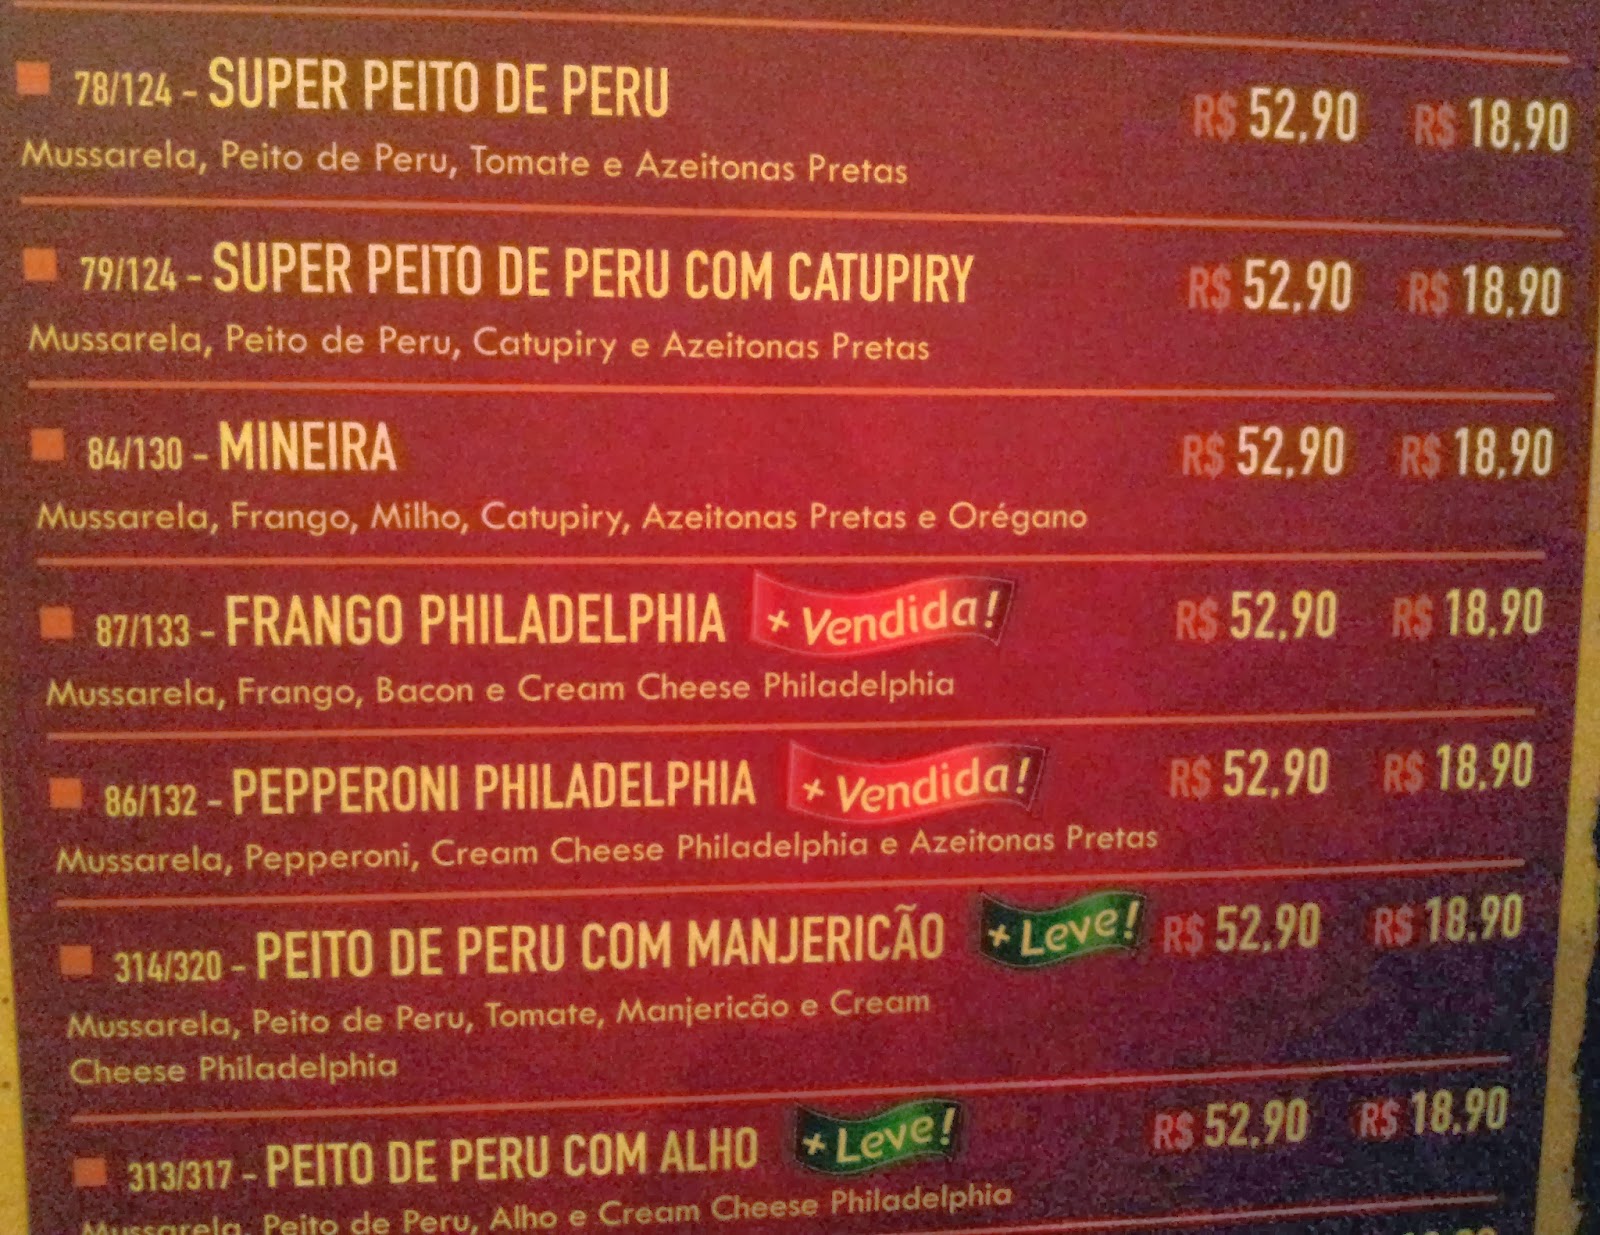 Super Pizza Pan Sorocaba Cardápio